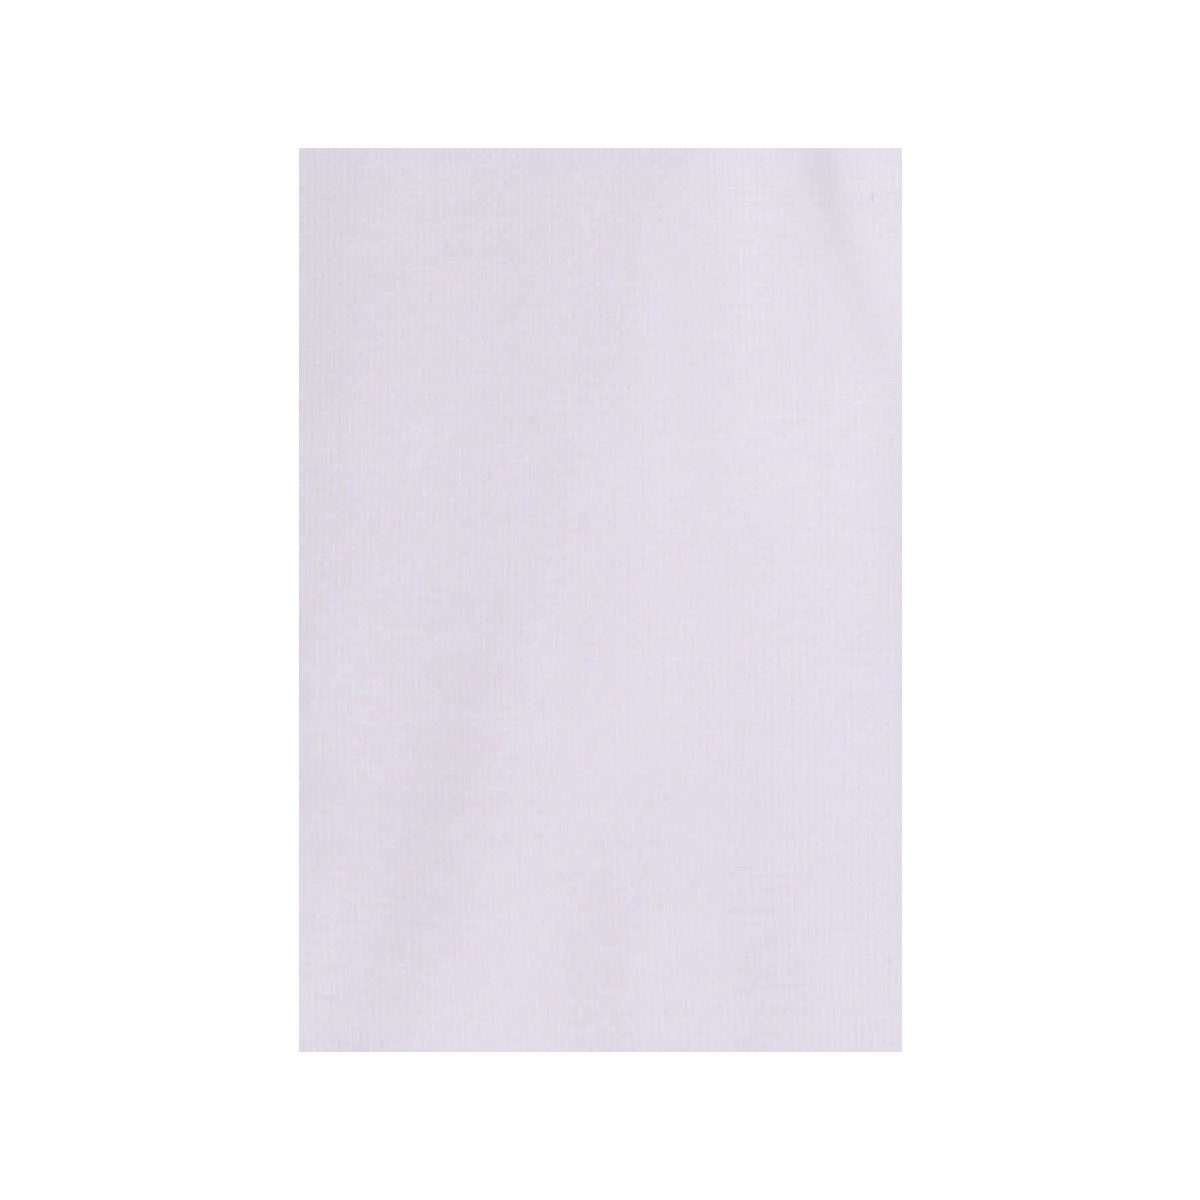 fit 00 regular weiß T-Shirt (1-tlg) OLYMP